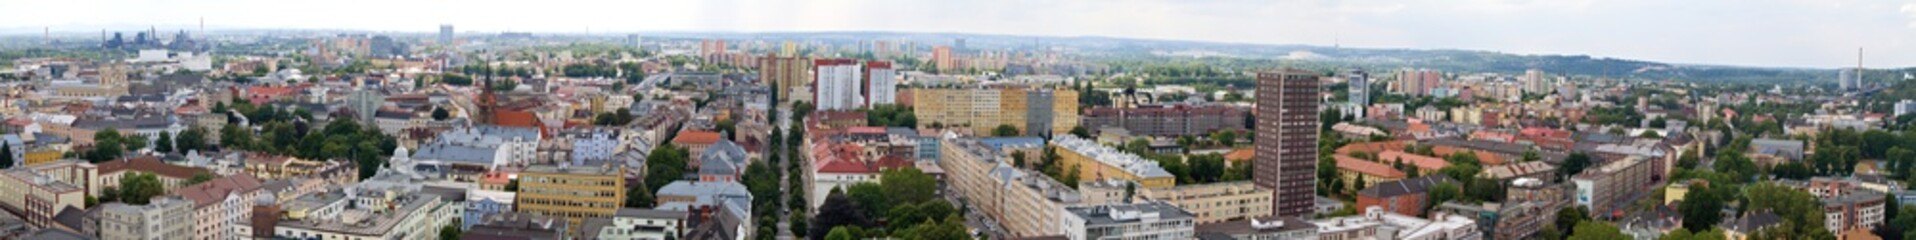 cityscape - panorama